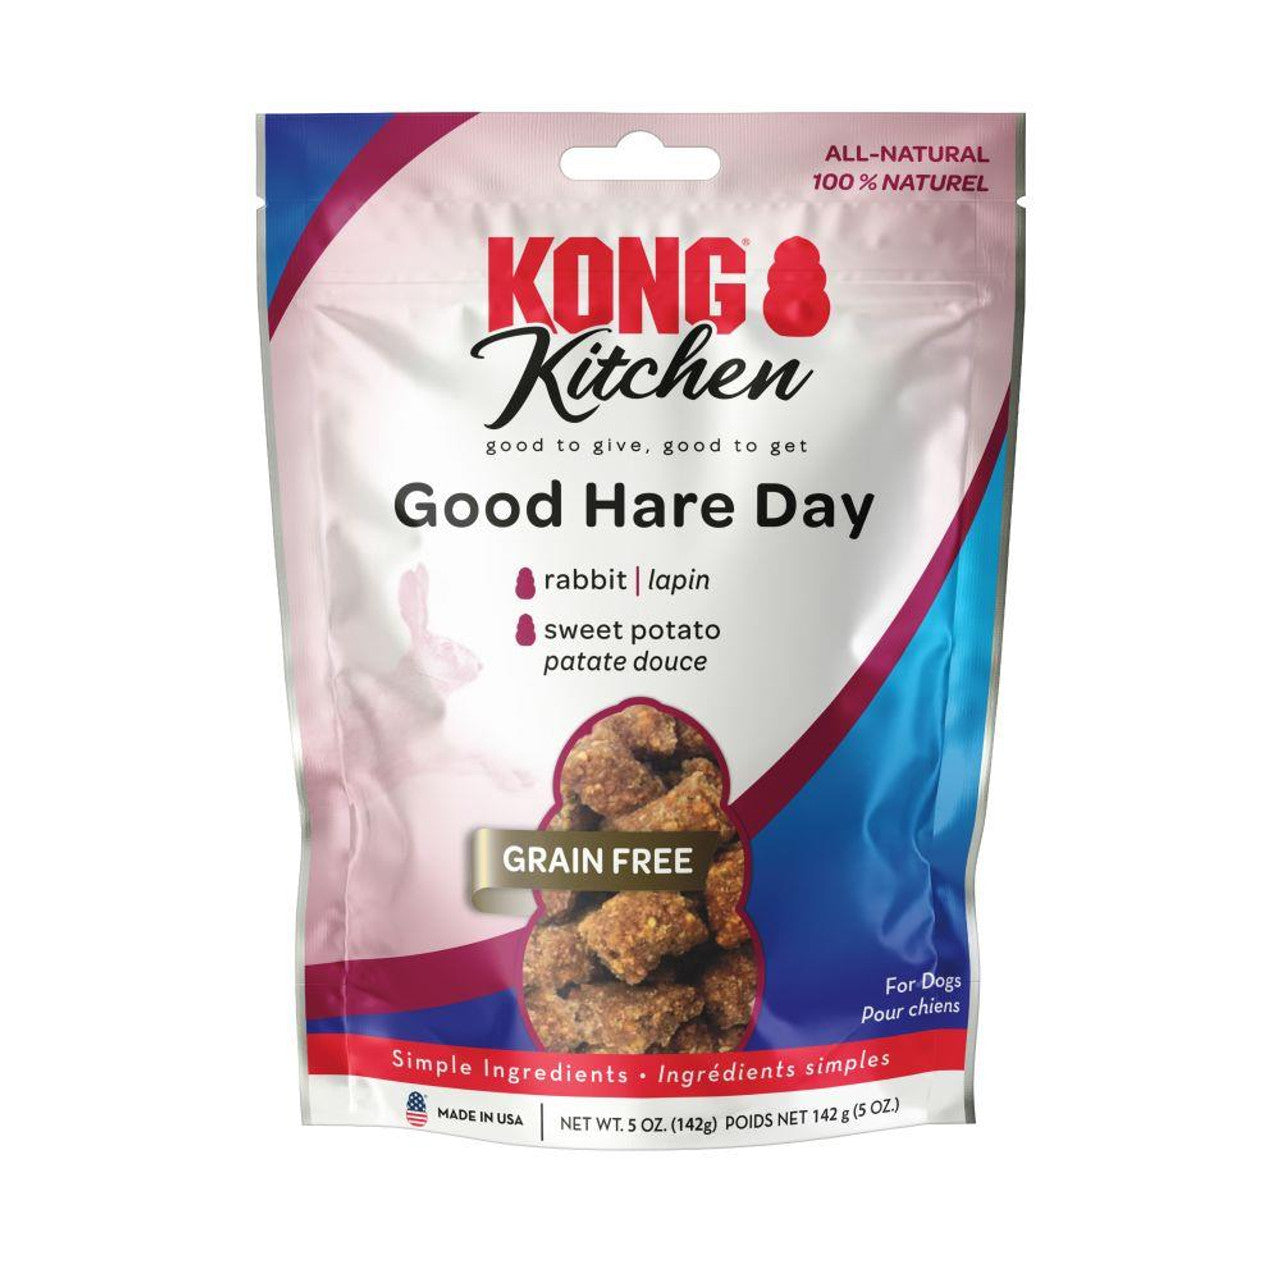 KONG Kitchen Grain Free Good Hare Day 5oz